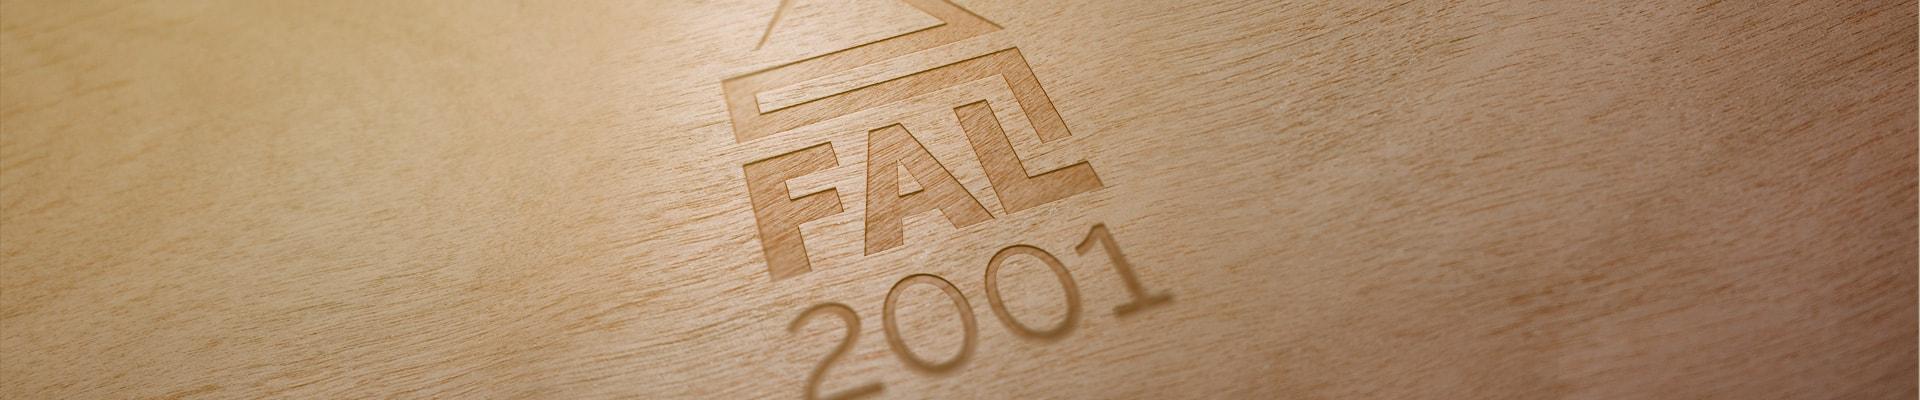 Fal 2001 - Blog